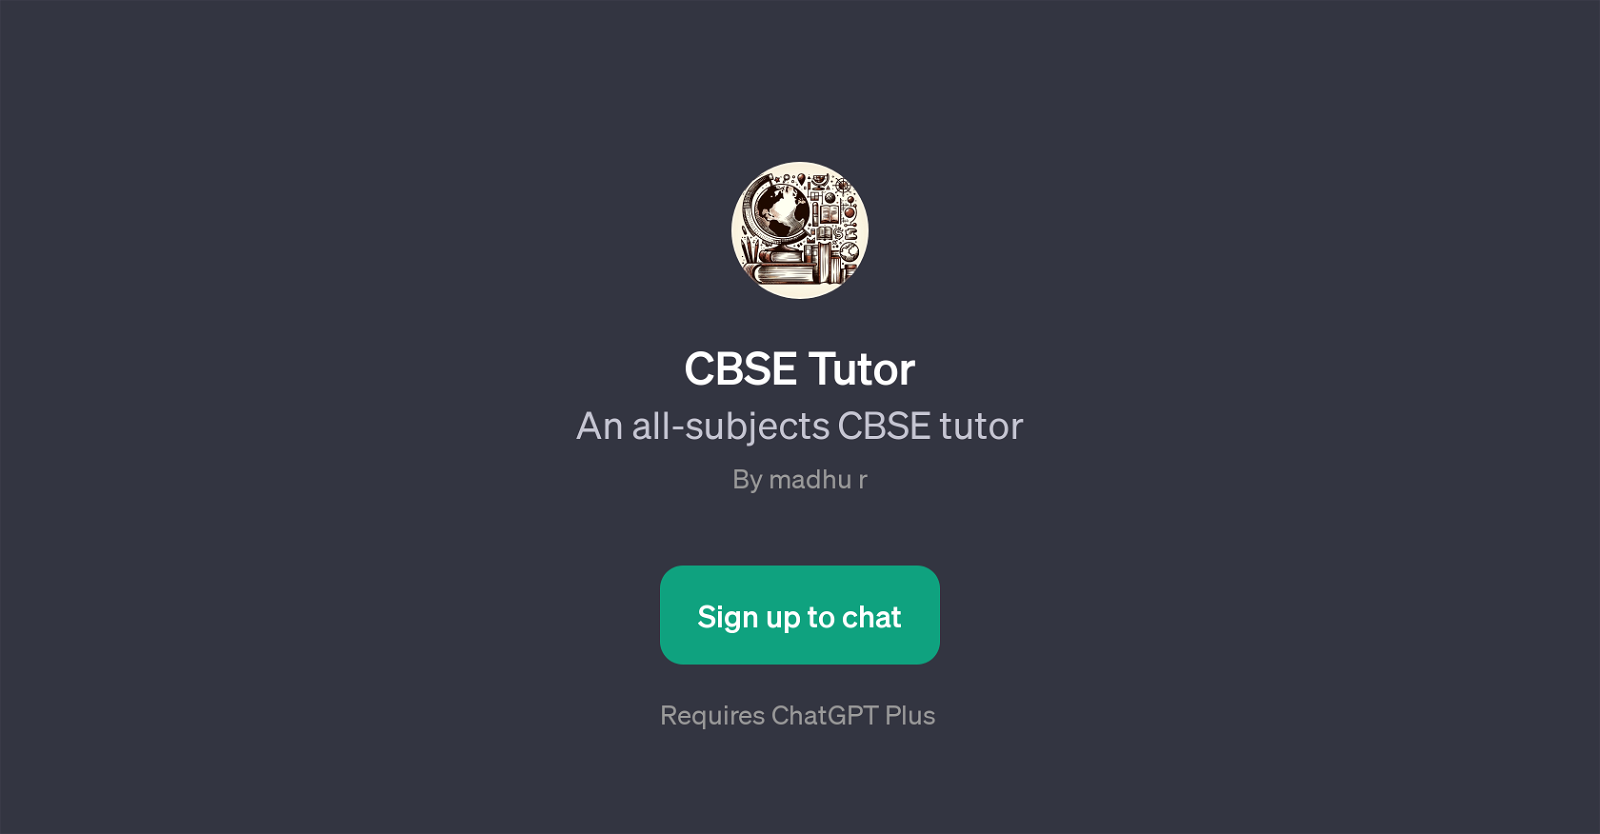 CBSE Tutor website